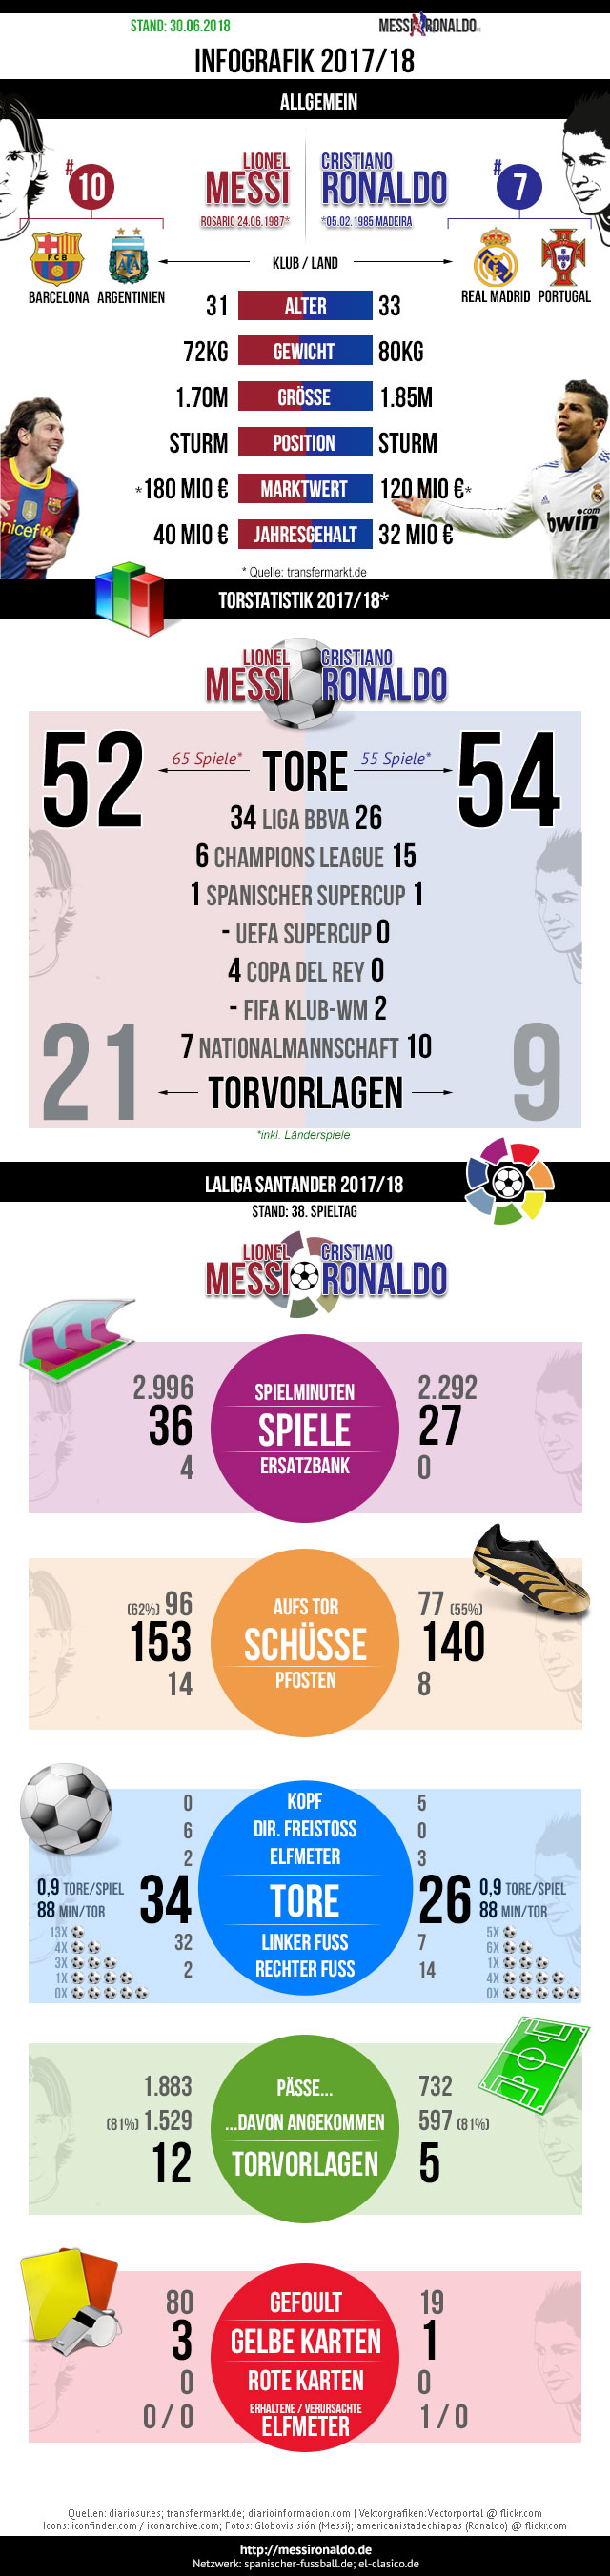 messi-ronaldo-infografik-2017-2018